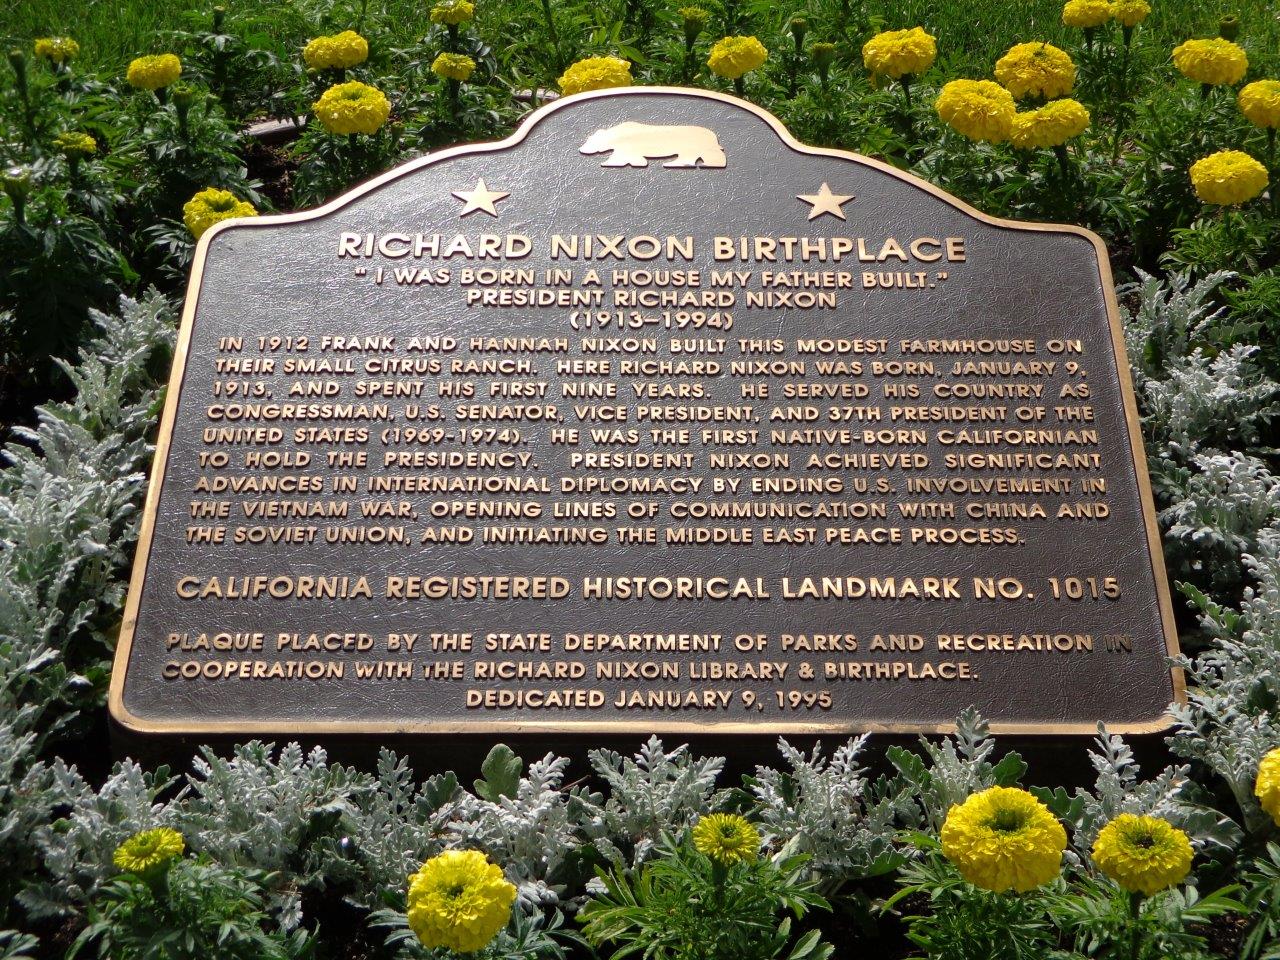 Richard Nixon birthplace historical marker